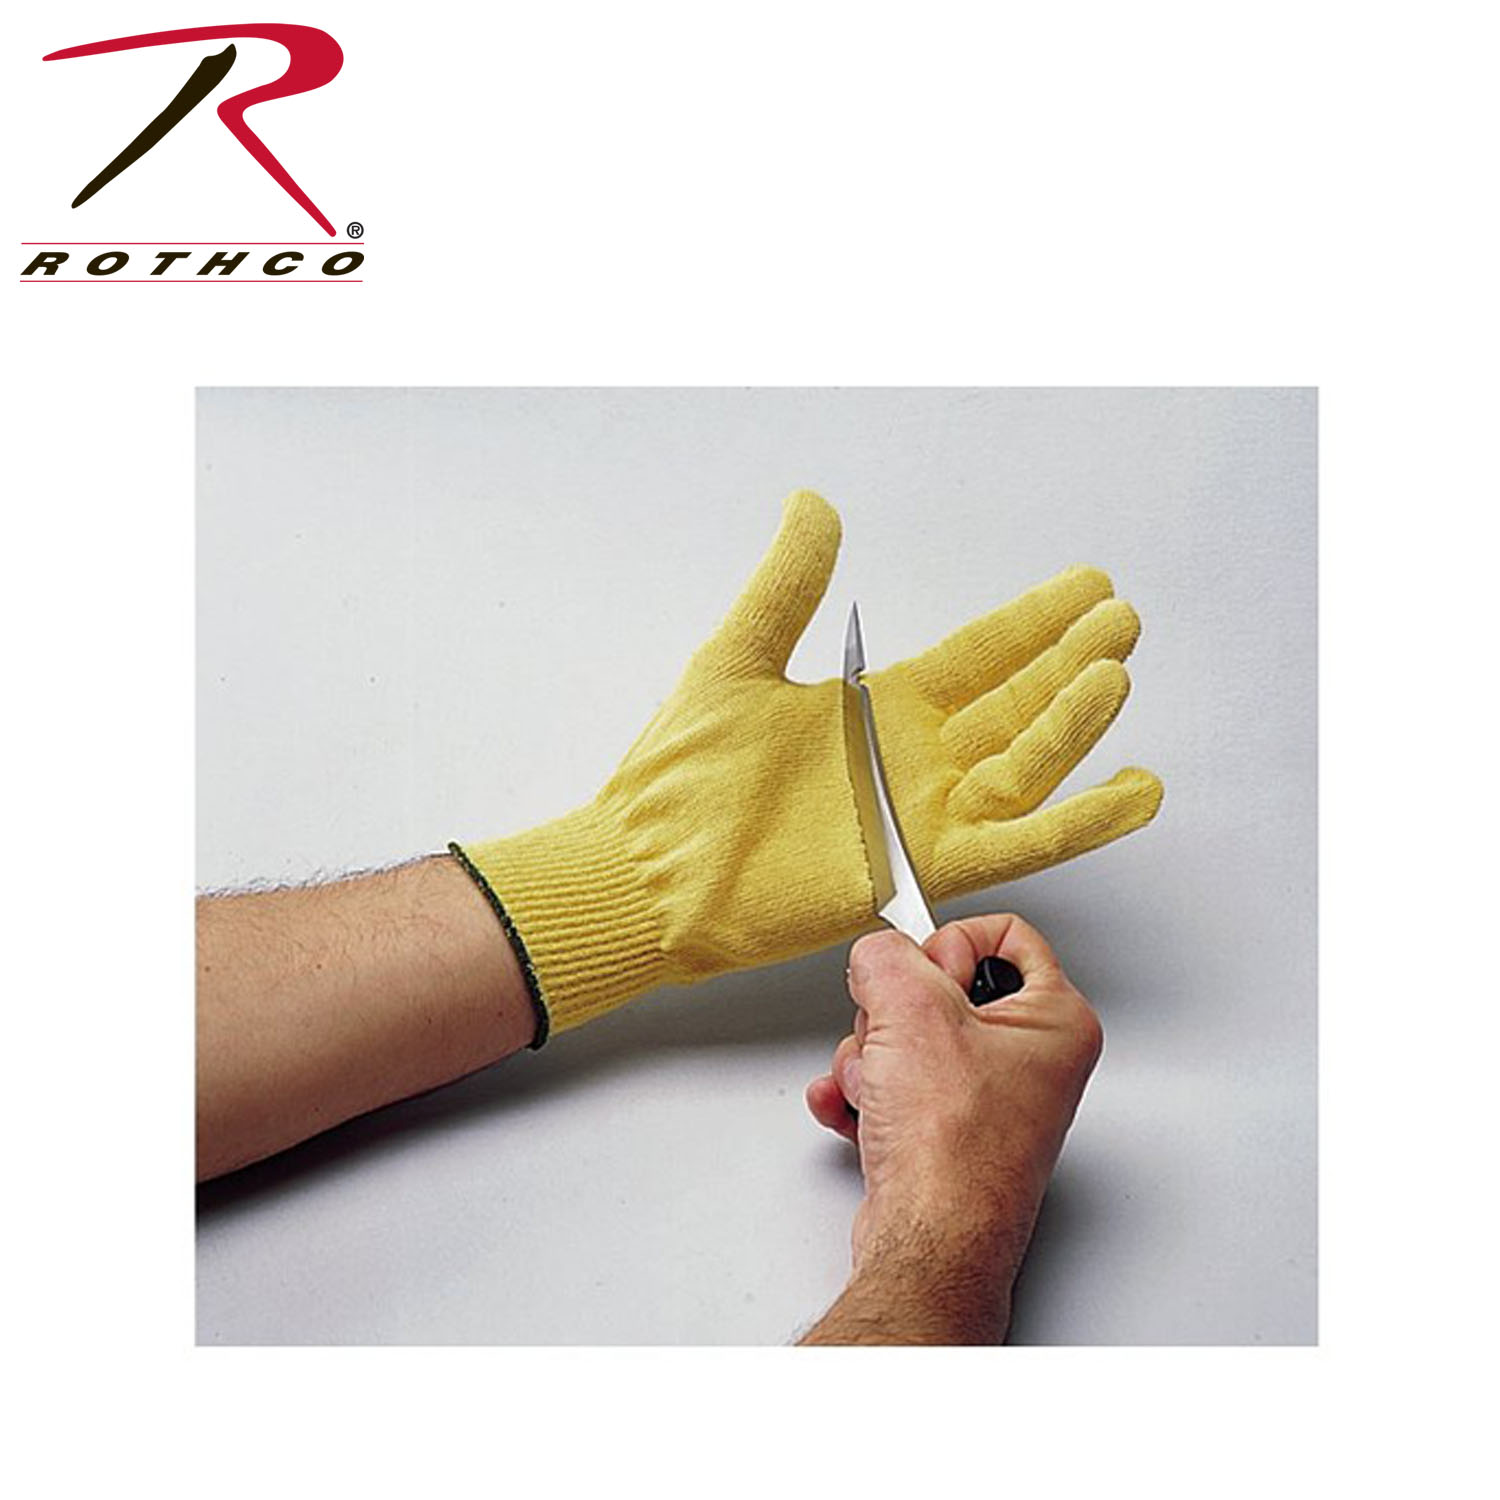 Shurrite Cut Resistant Heavyweight Gloves